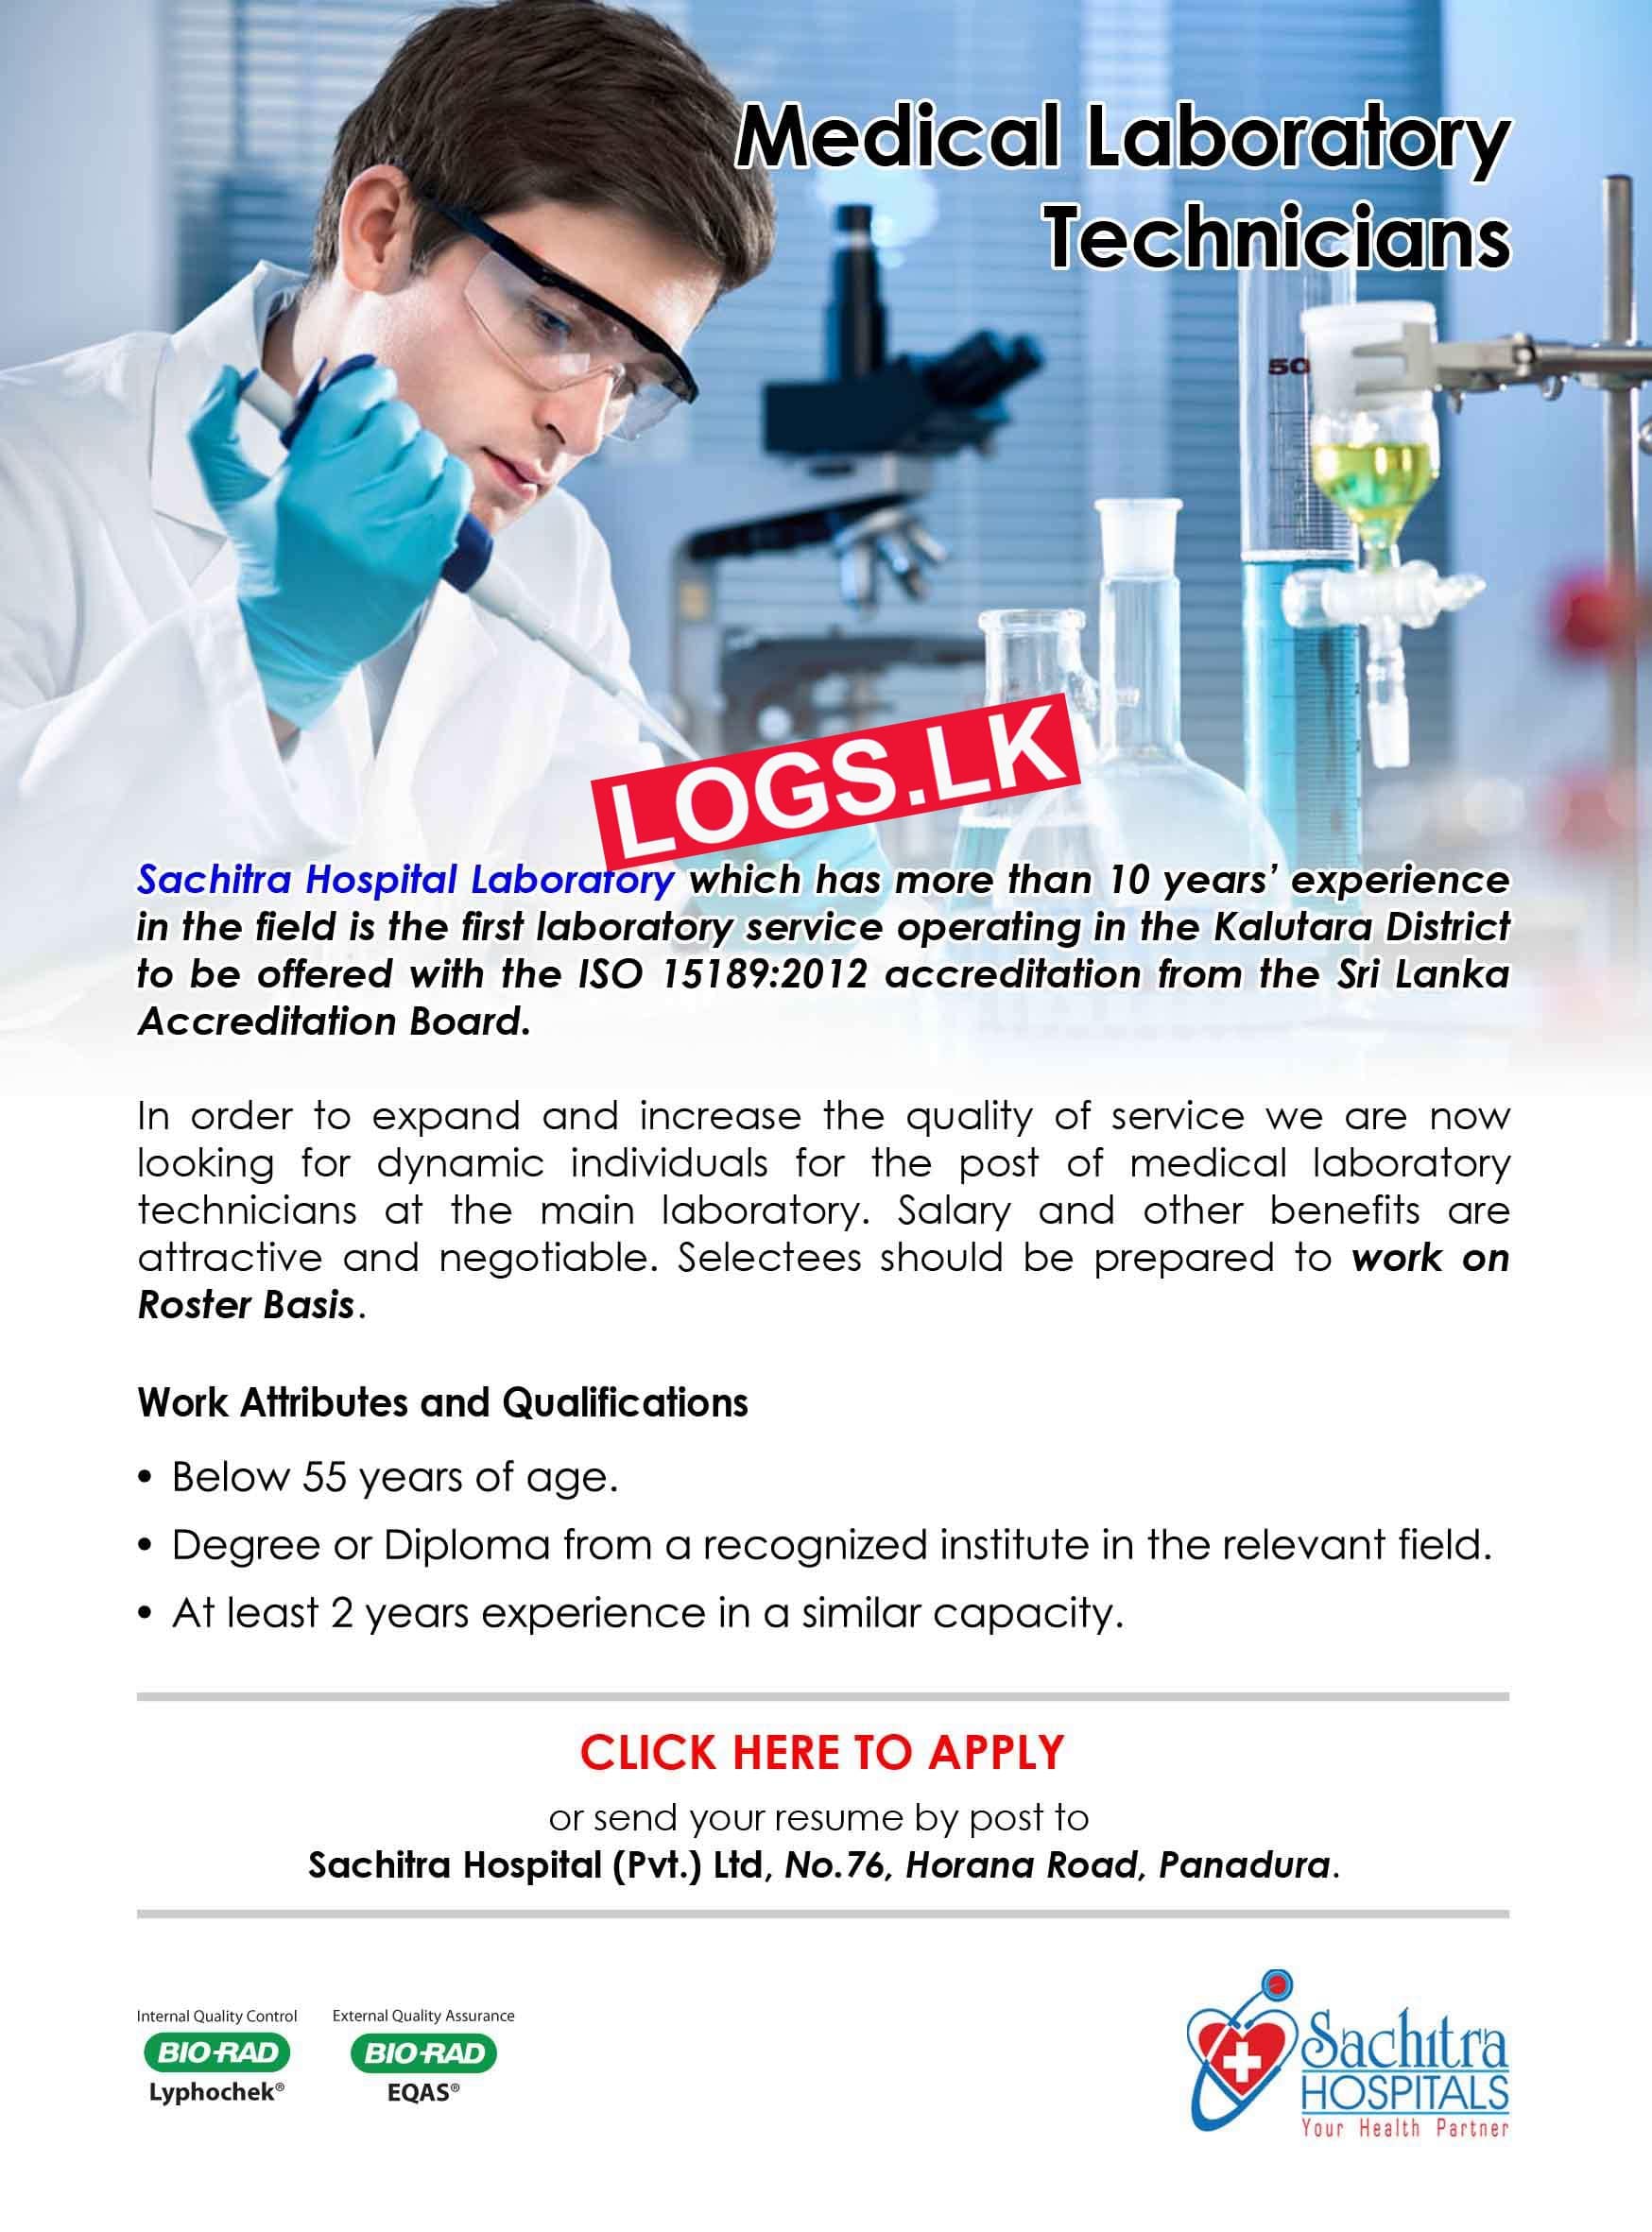 Medical Laboratory Technicians Job Vacancy at Sachitra Hospitals Jobs Application